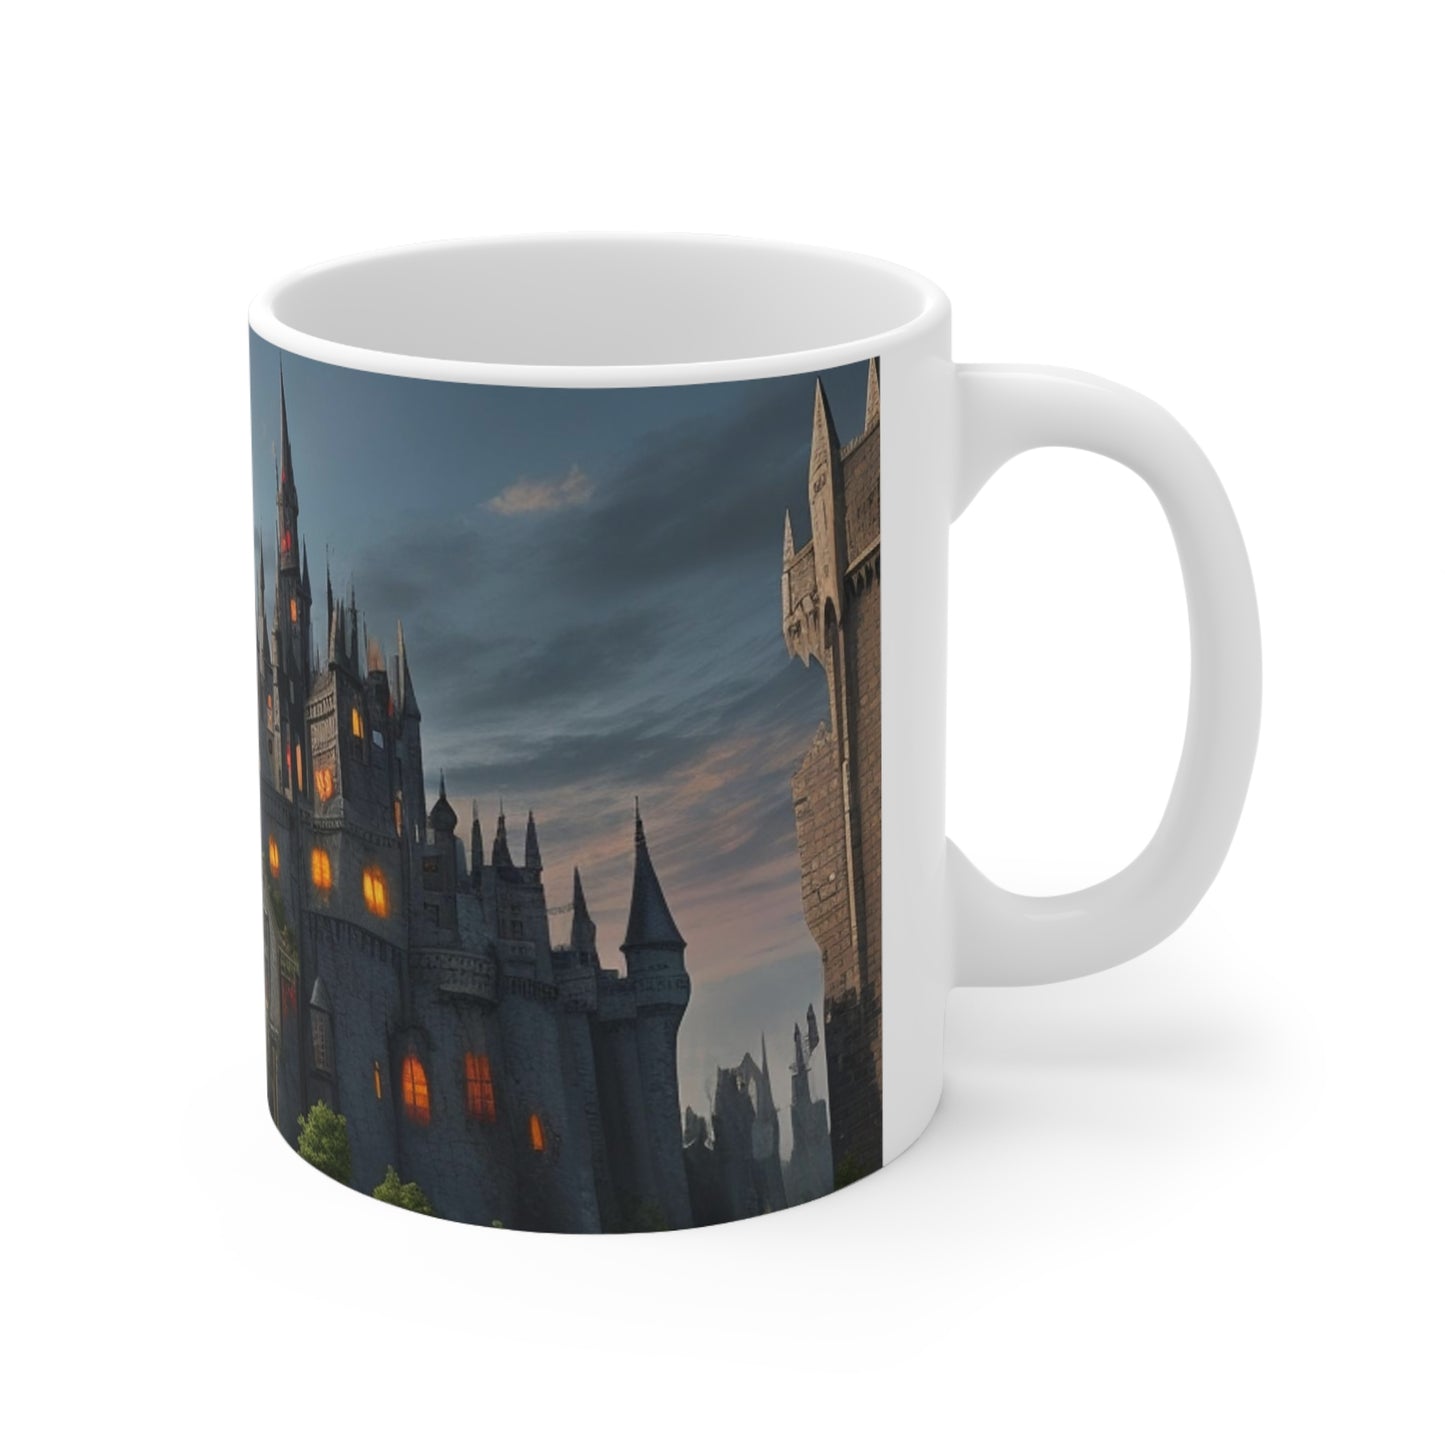 Scenic Castle With Glowing Windows Mug - Ceramic Coffee Mug 11oz